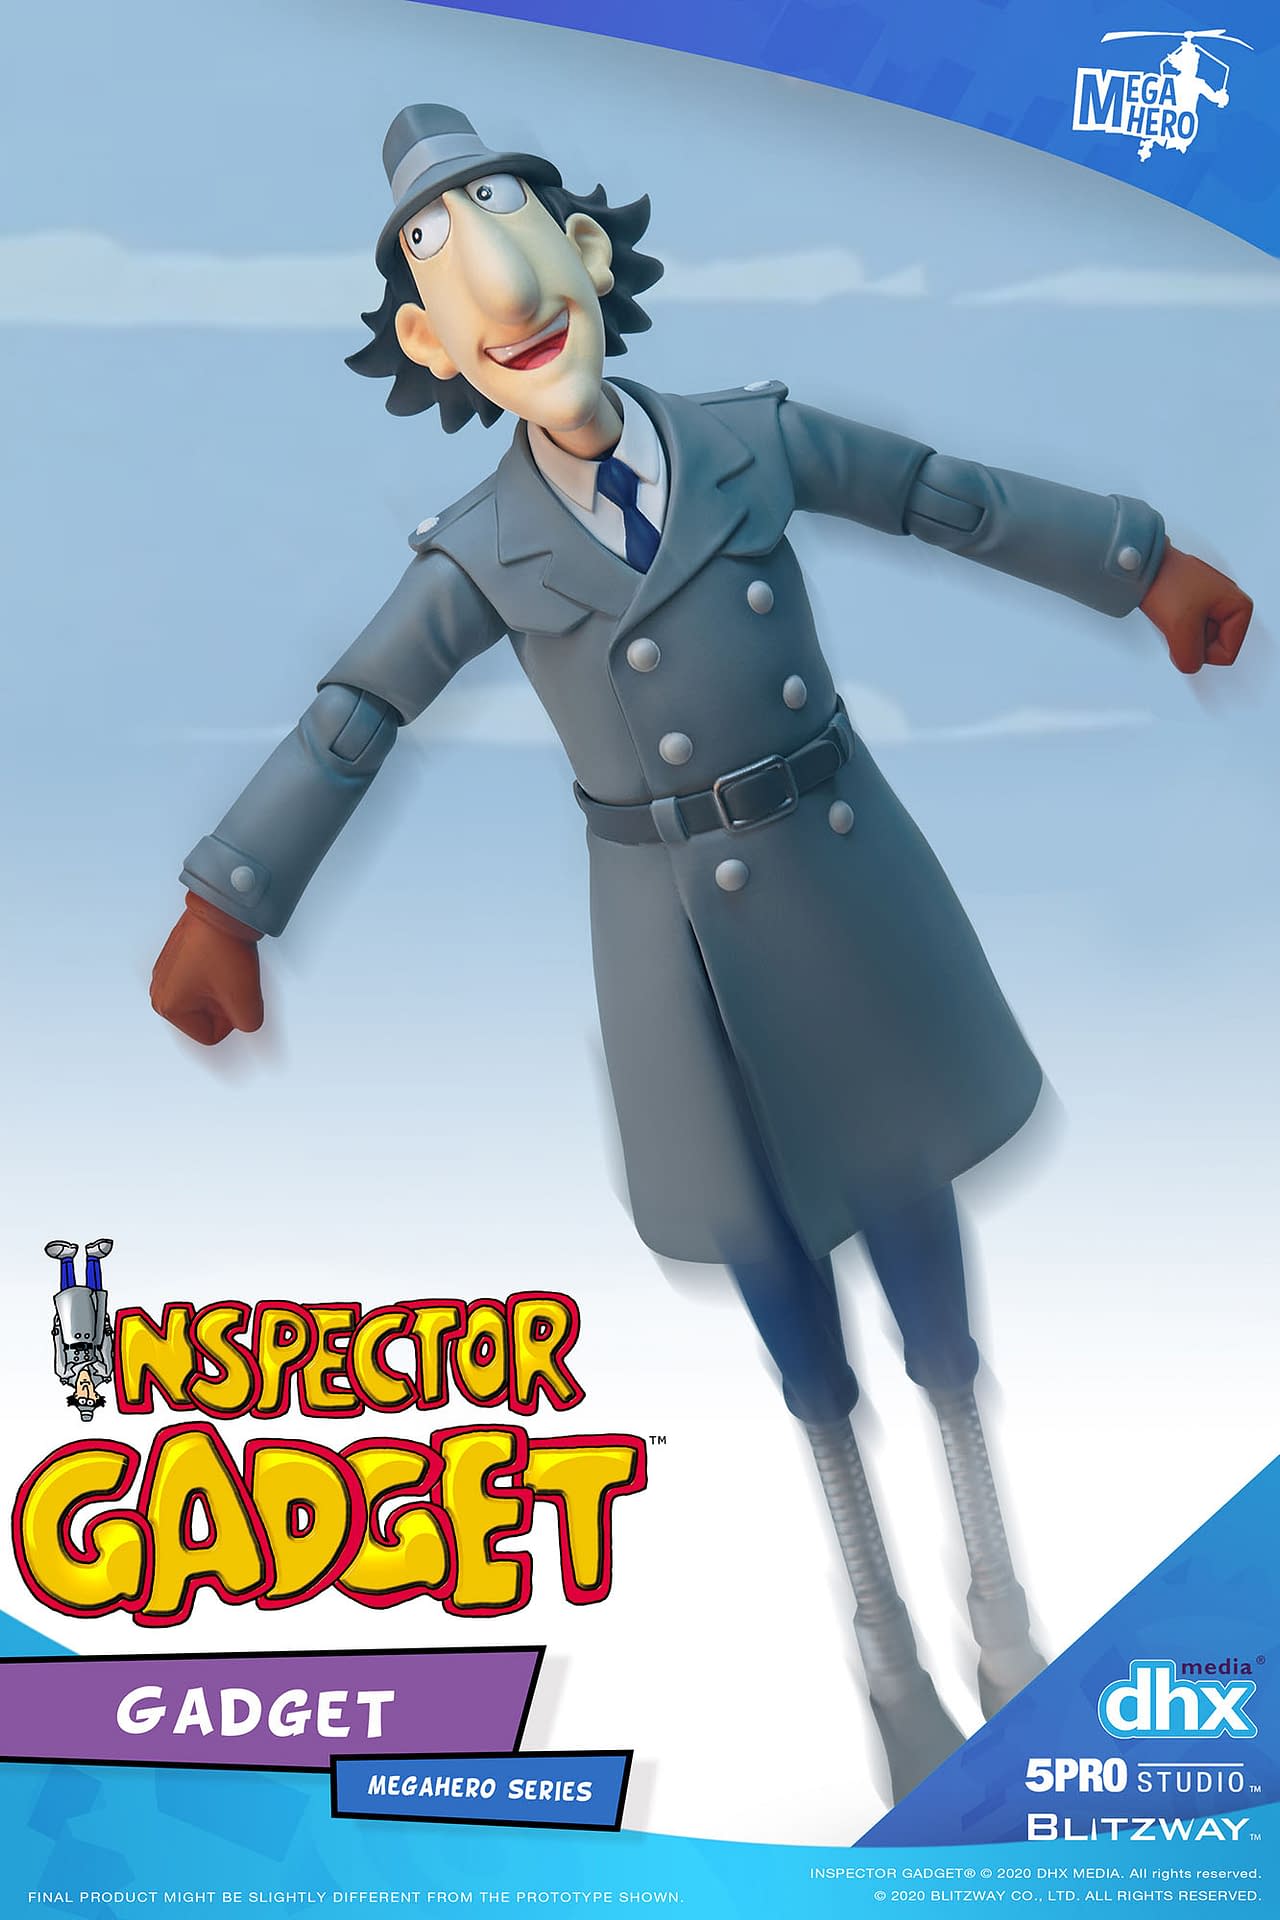 Inspector Gadget Cartoon Returns with New Figures from Blitzway